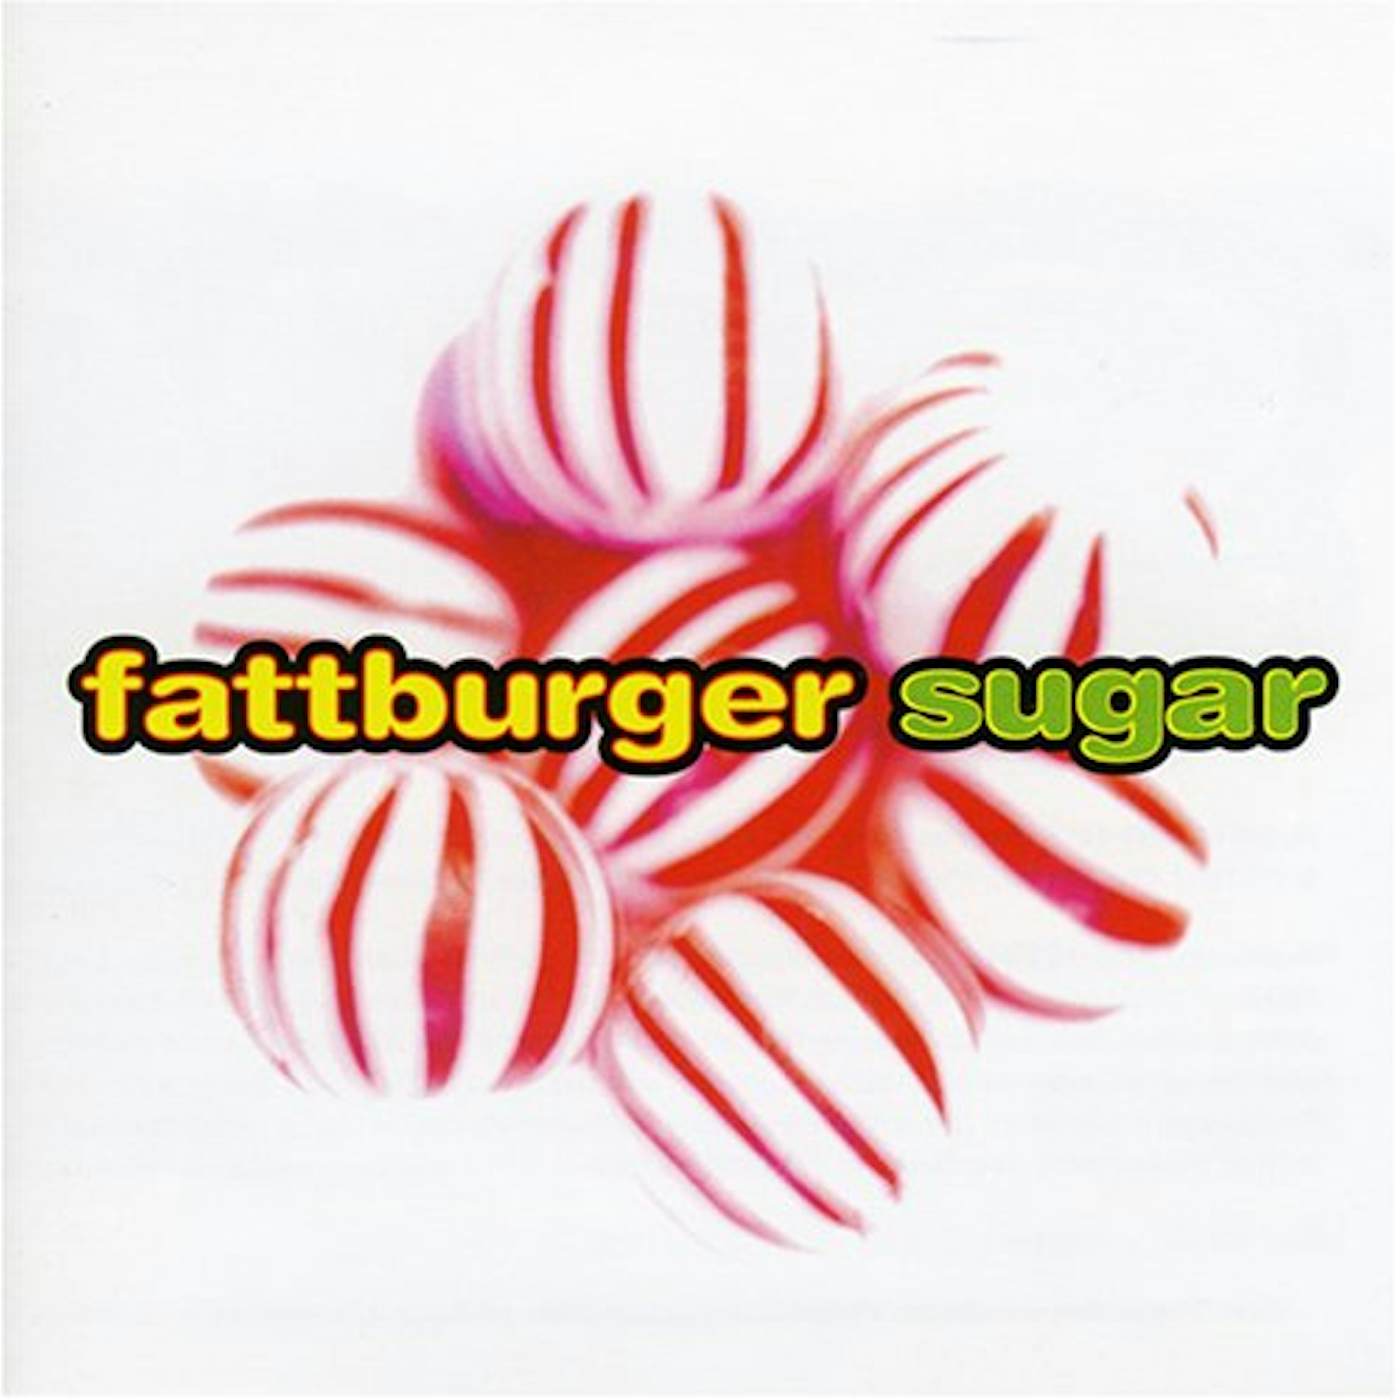 Fattburger SUGAR CD